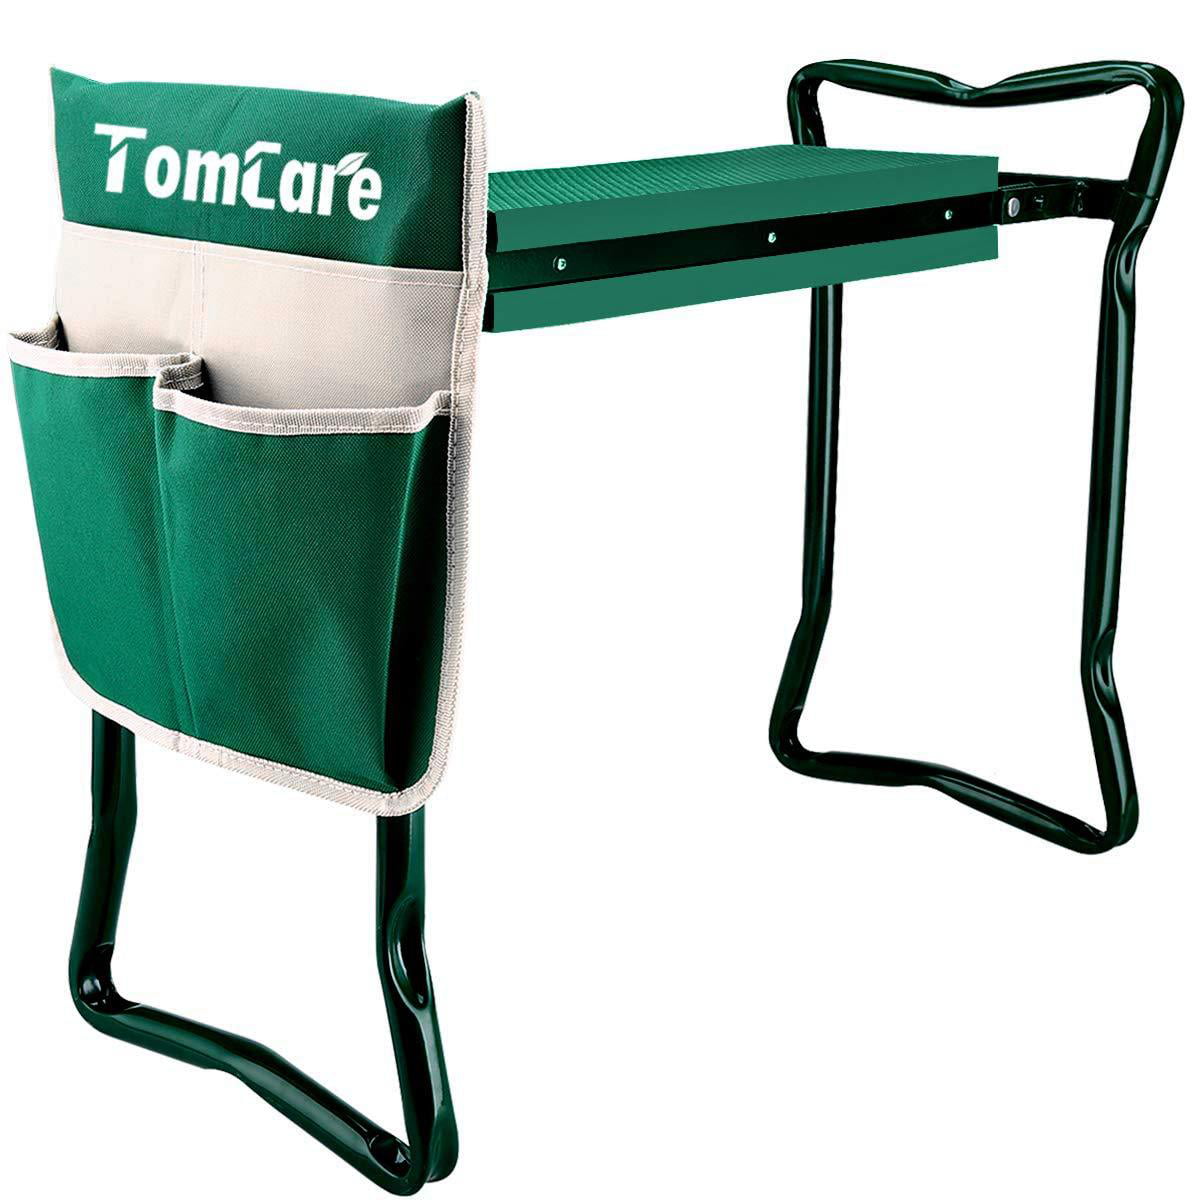 TomCare Garden Kneeler Seat Garden Bench Garden Stools Foldable Stool